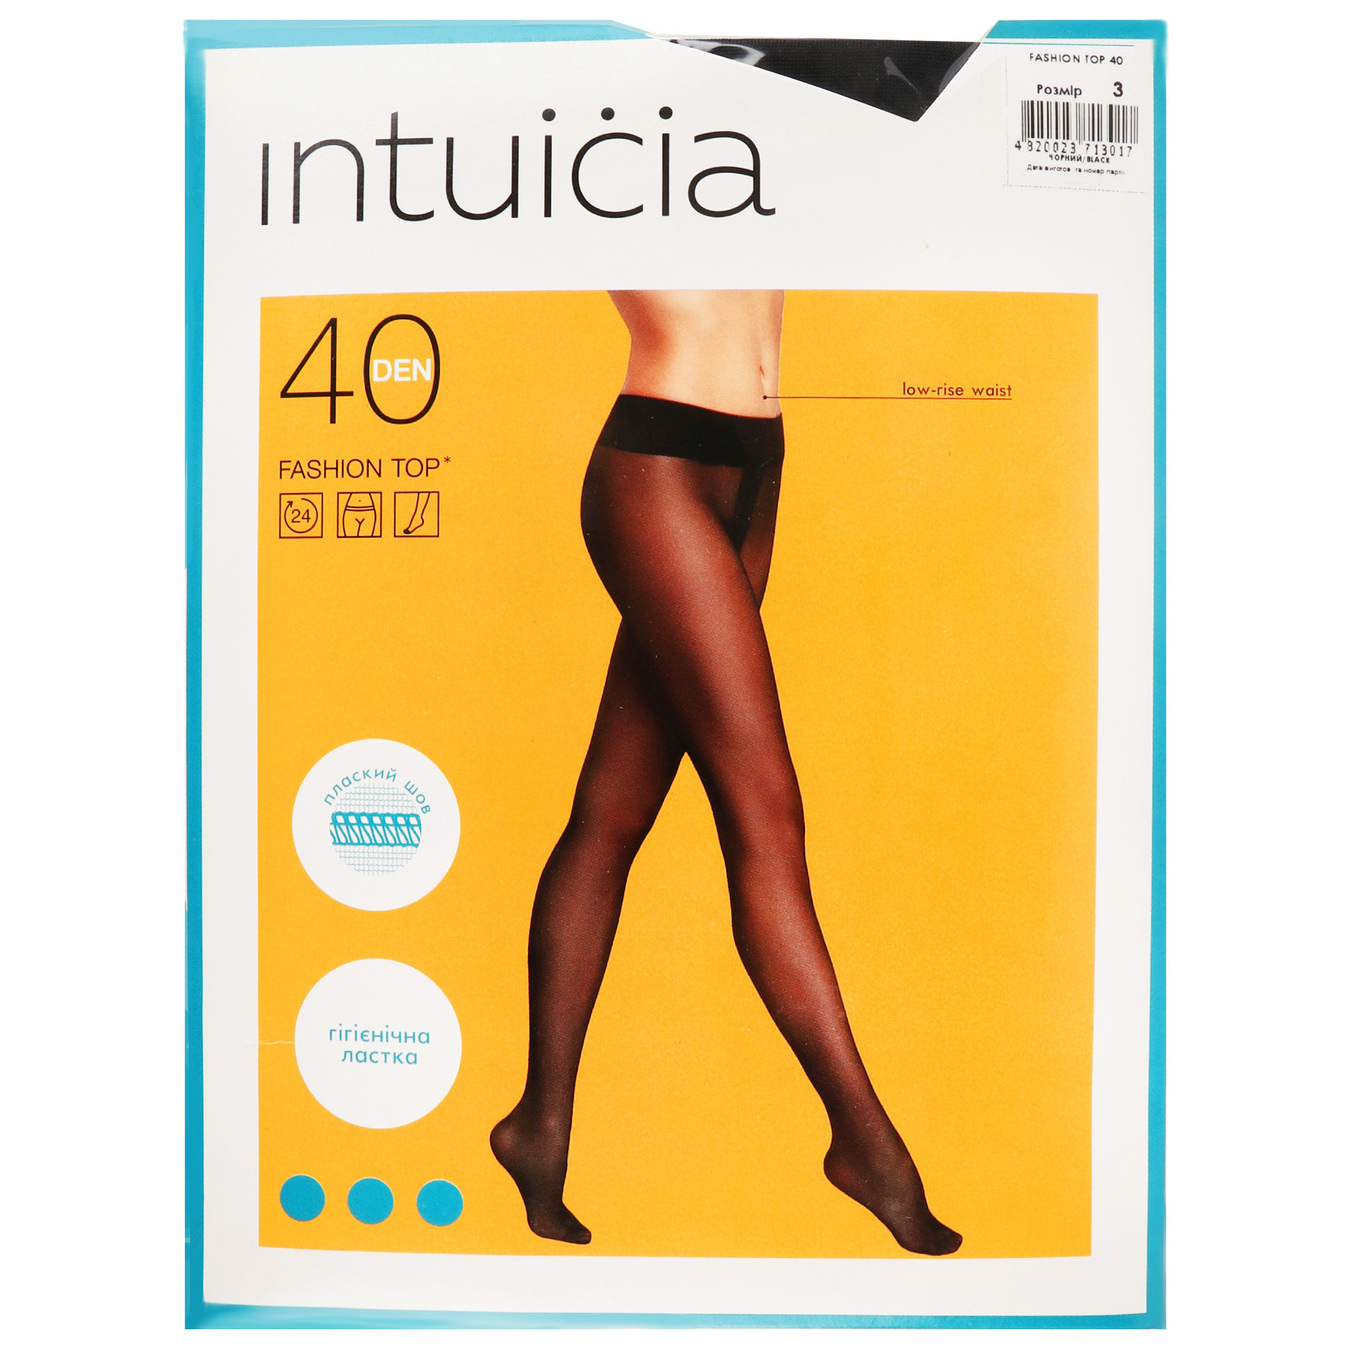 Women's tights Intuitsia Fashion Top black 40 den 3 size